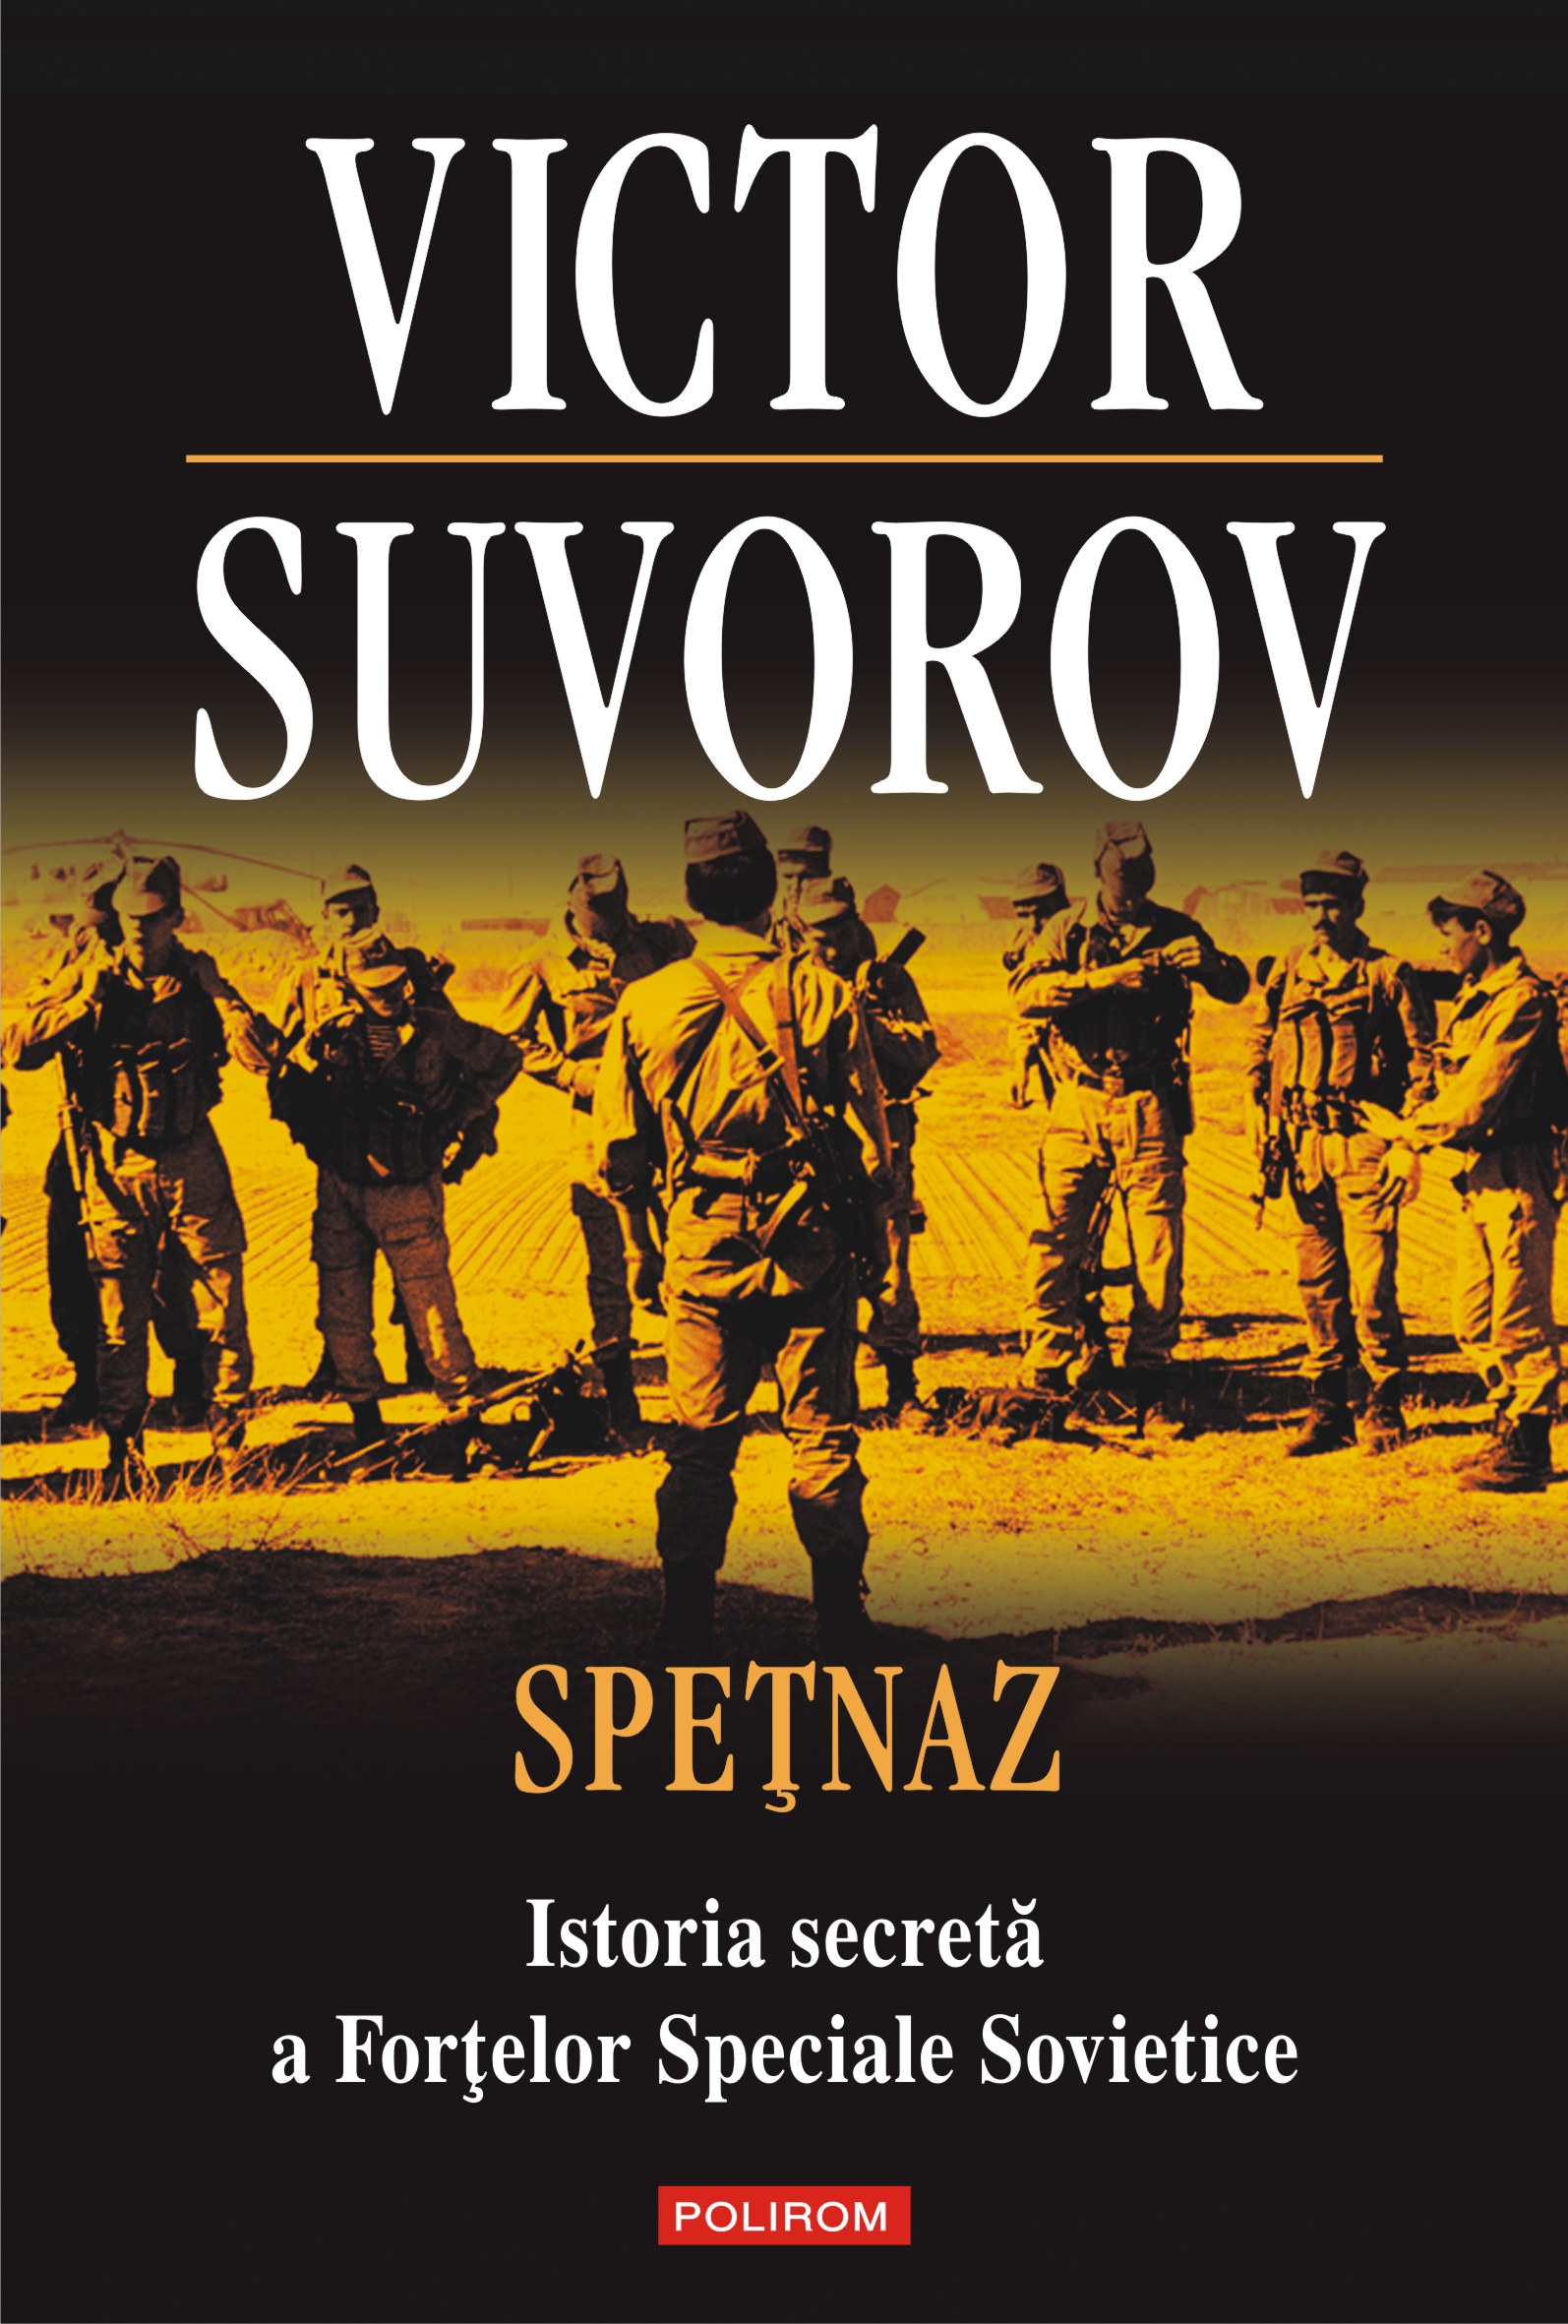 eBook Spetnaz istoria secreta a Fortelor Speciale Sovietice - Victor Suvorov